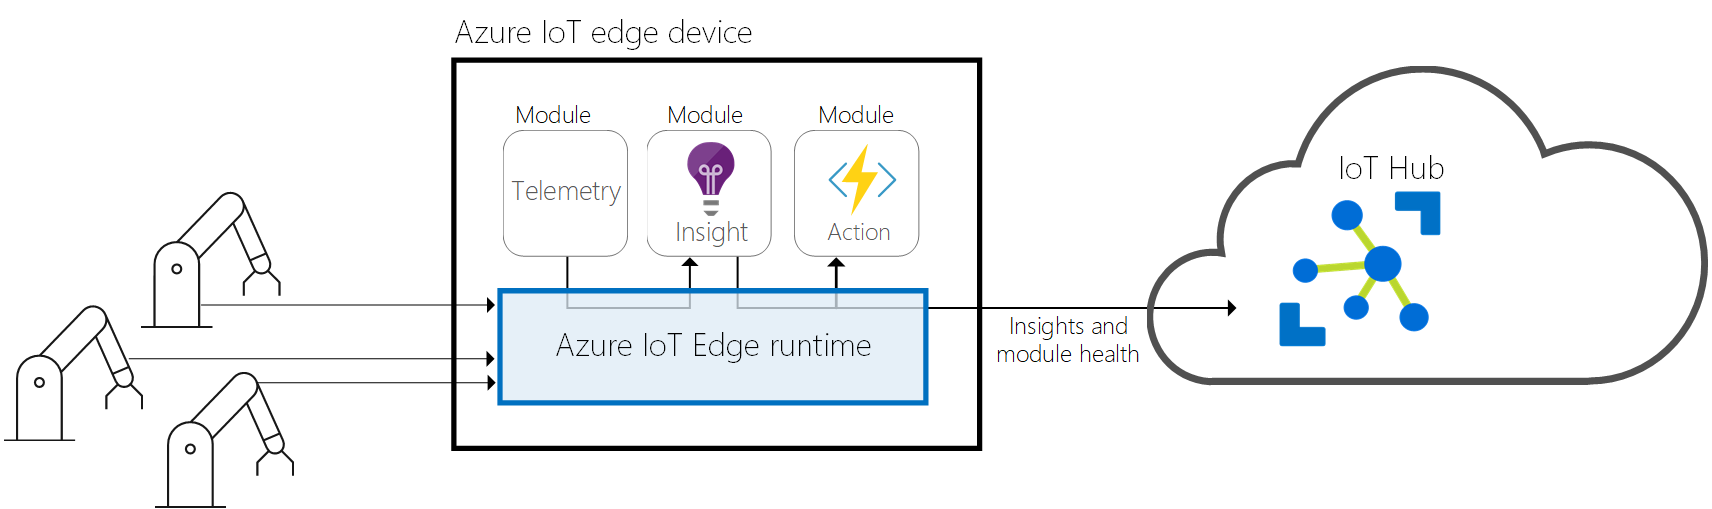 Azure loT edge device

Module _ Module

7

Telemetry @

Insight )\

. Insights and
Azure loT Edge runtime module health